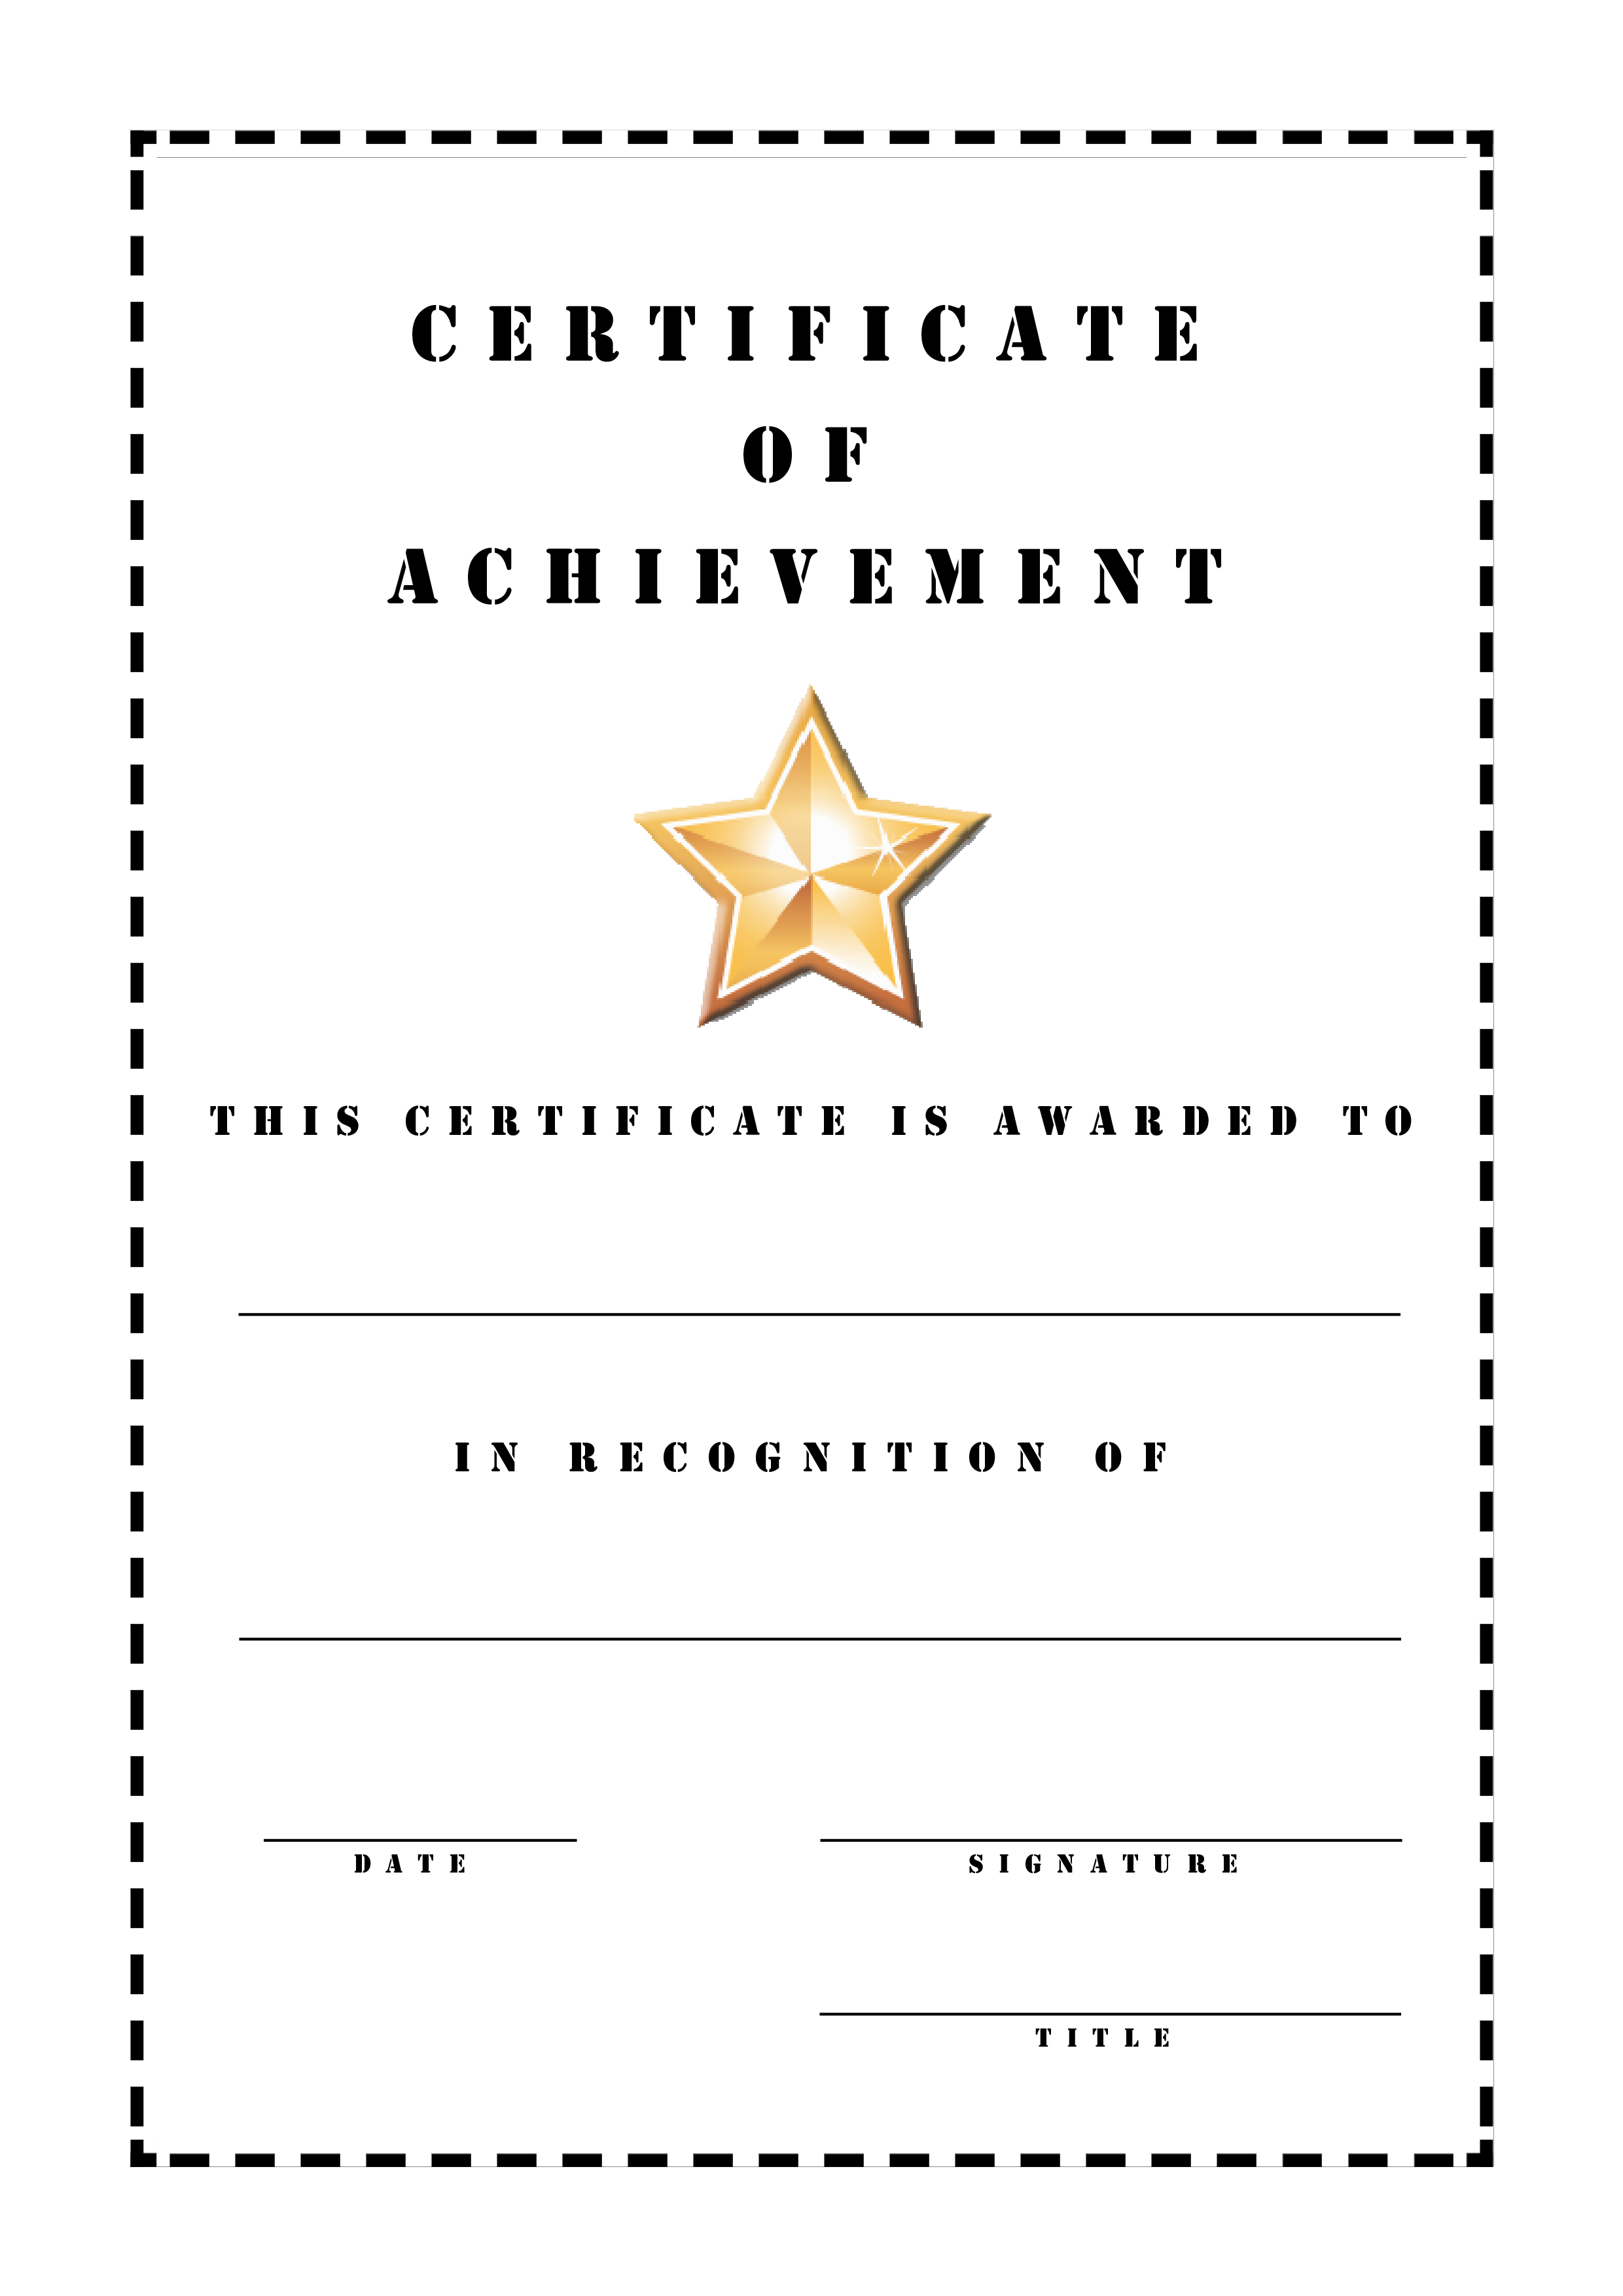 Certificate Of Achievement Stencil main image